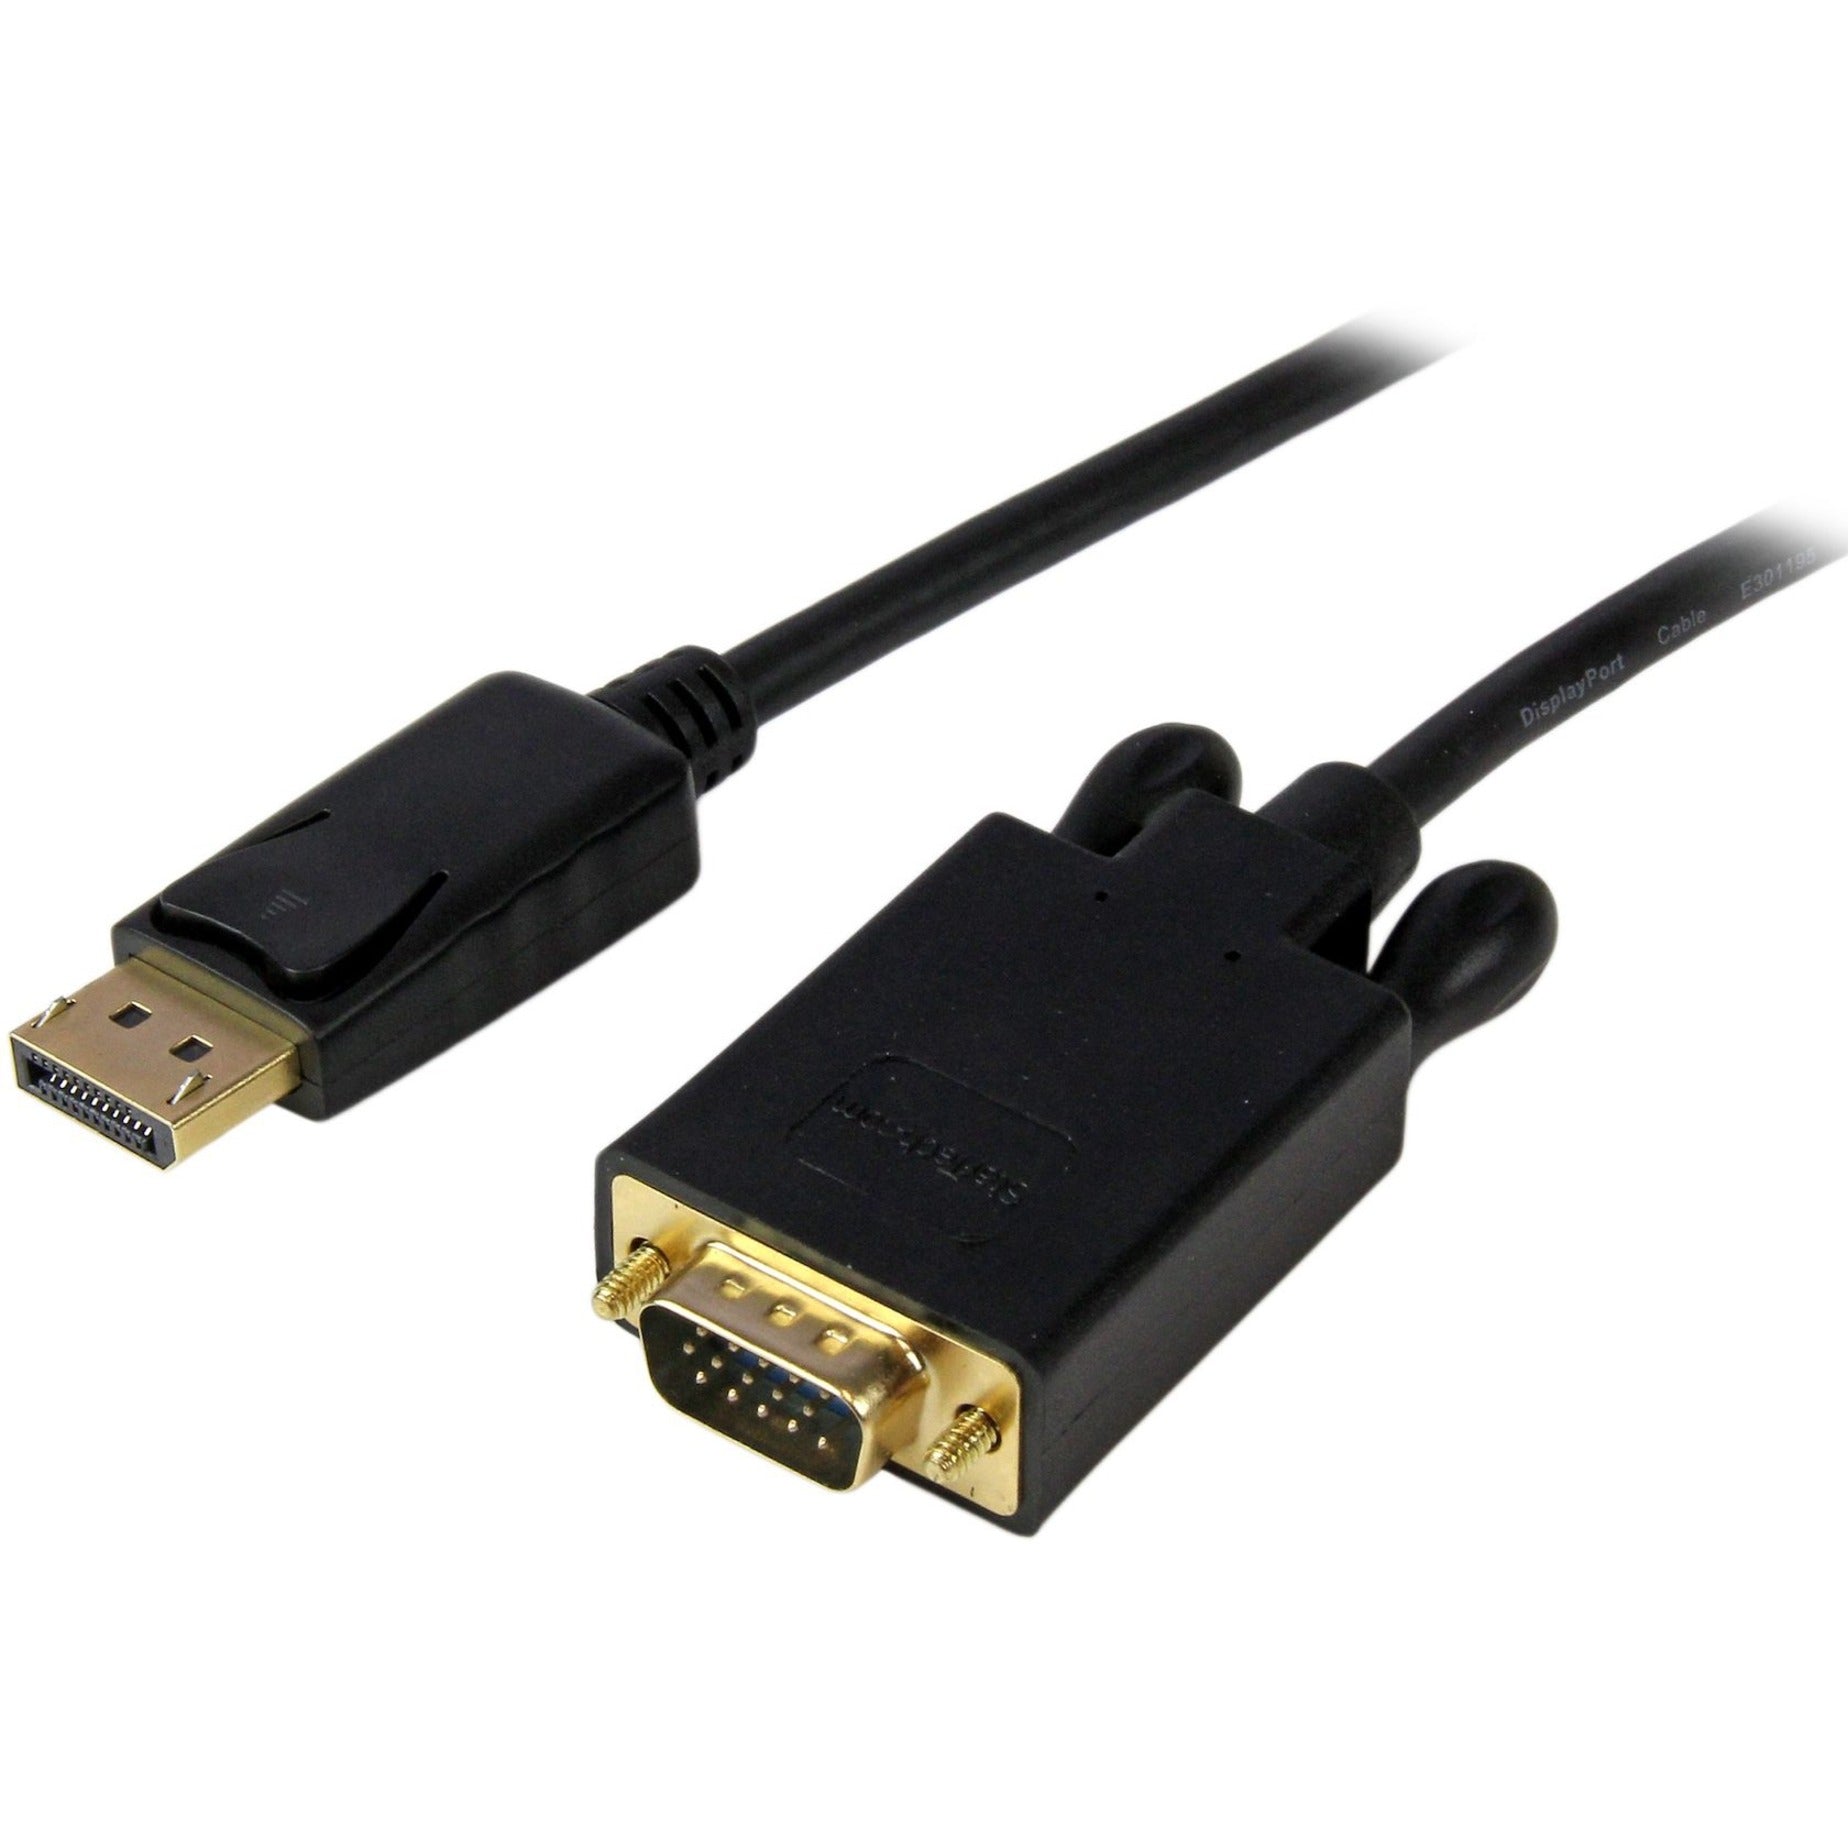 StarTech.com DP2VGAMM10B 10 ft DisplayPort to VGA Adapter Converter Cable, Black